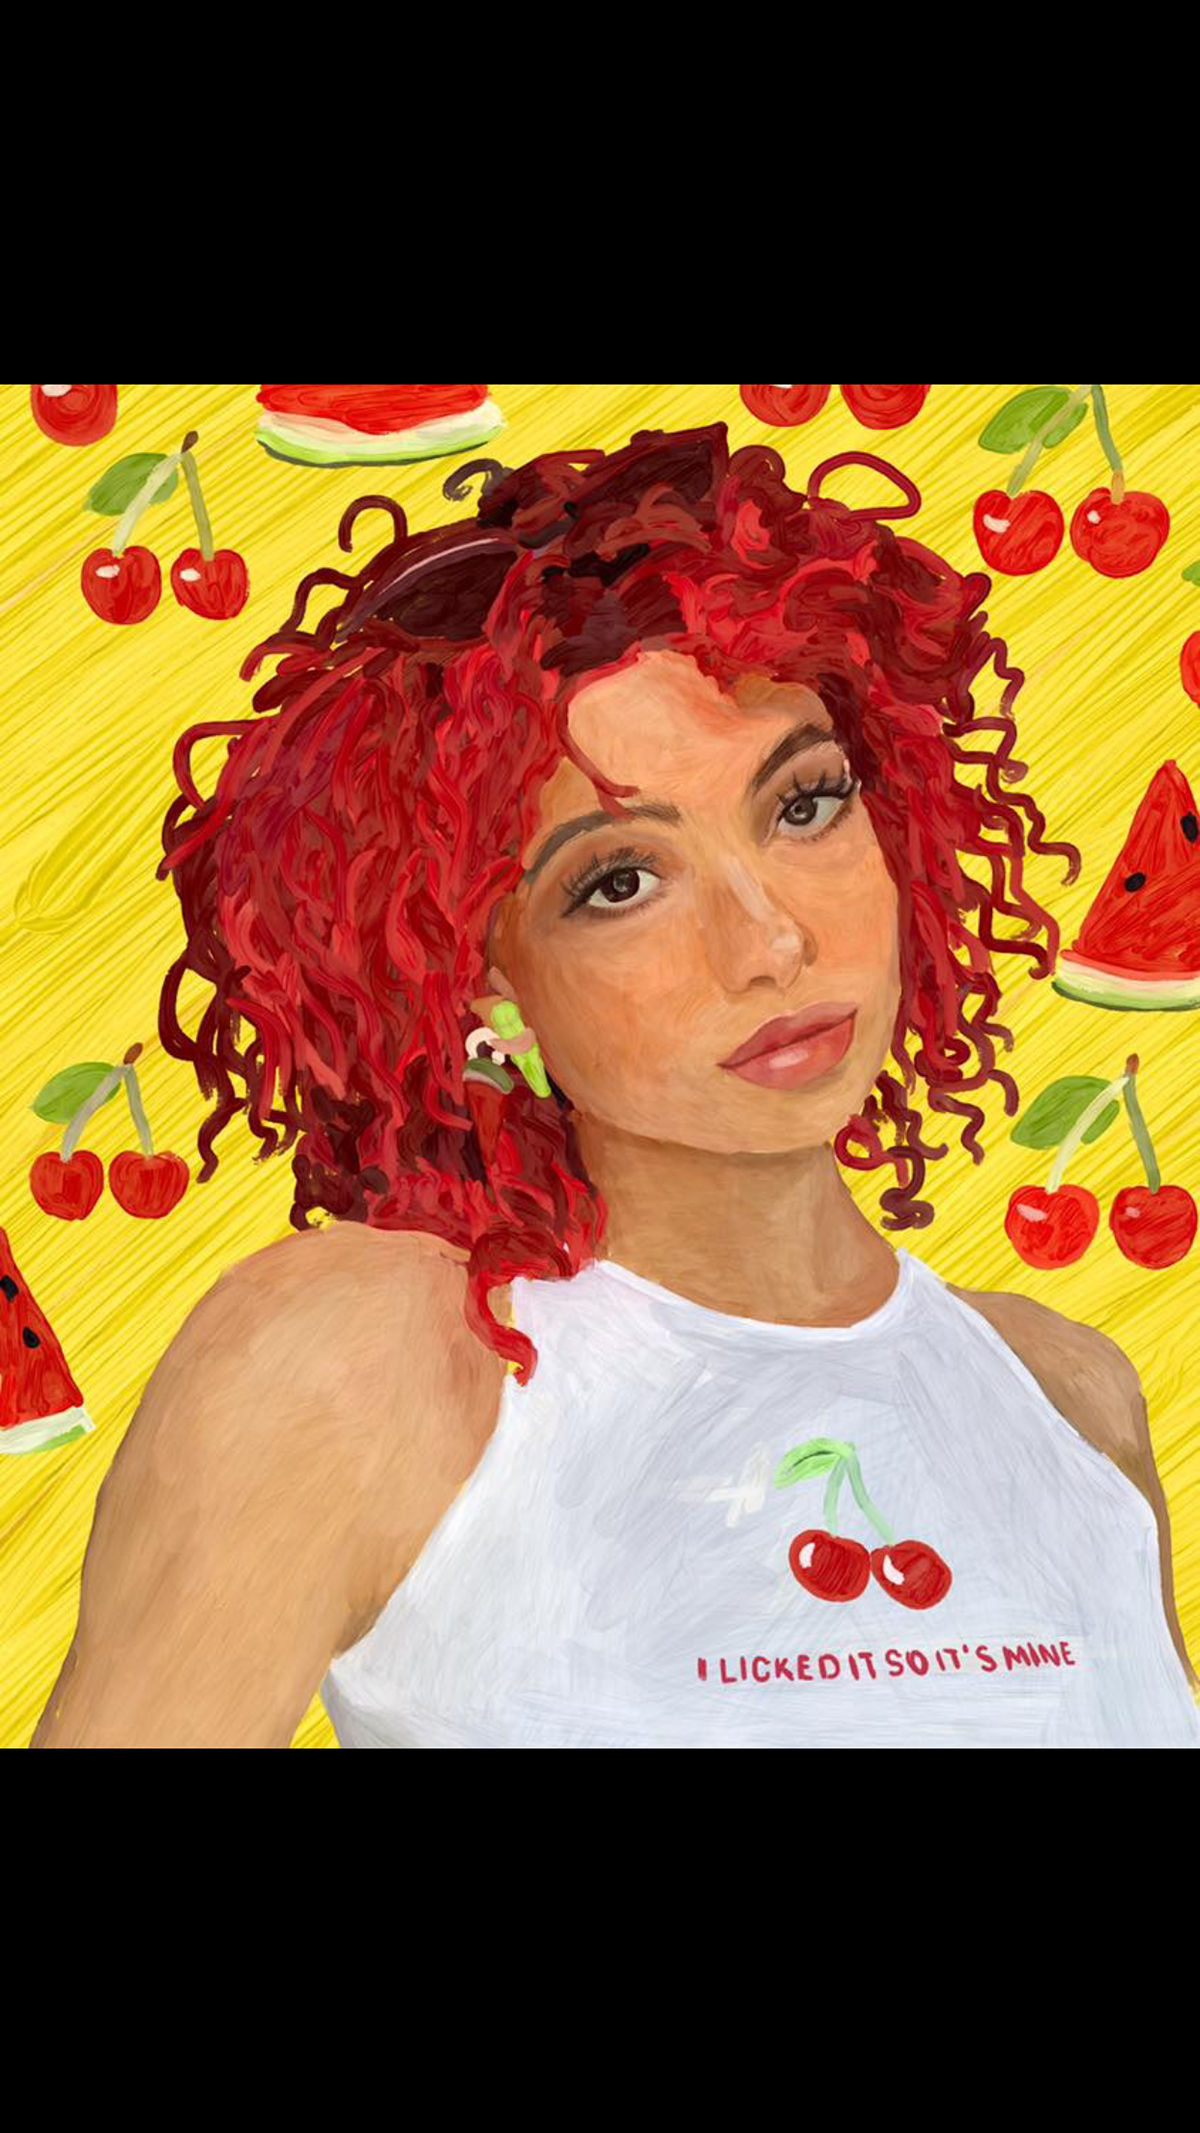 paint digital red draw grunge portrait girl pretty cherry watermelon spring happy bright